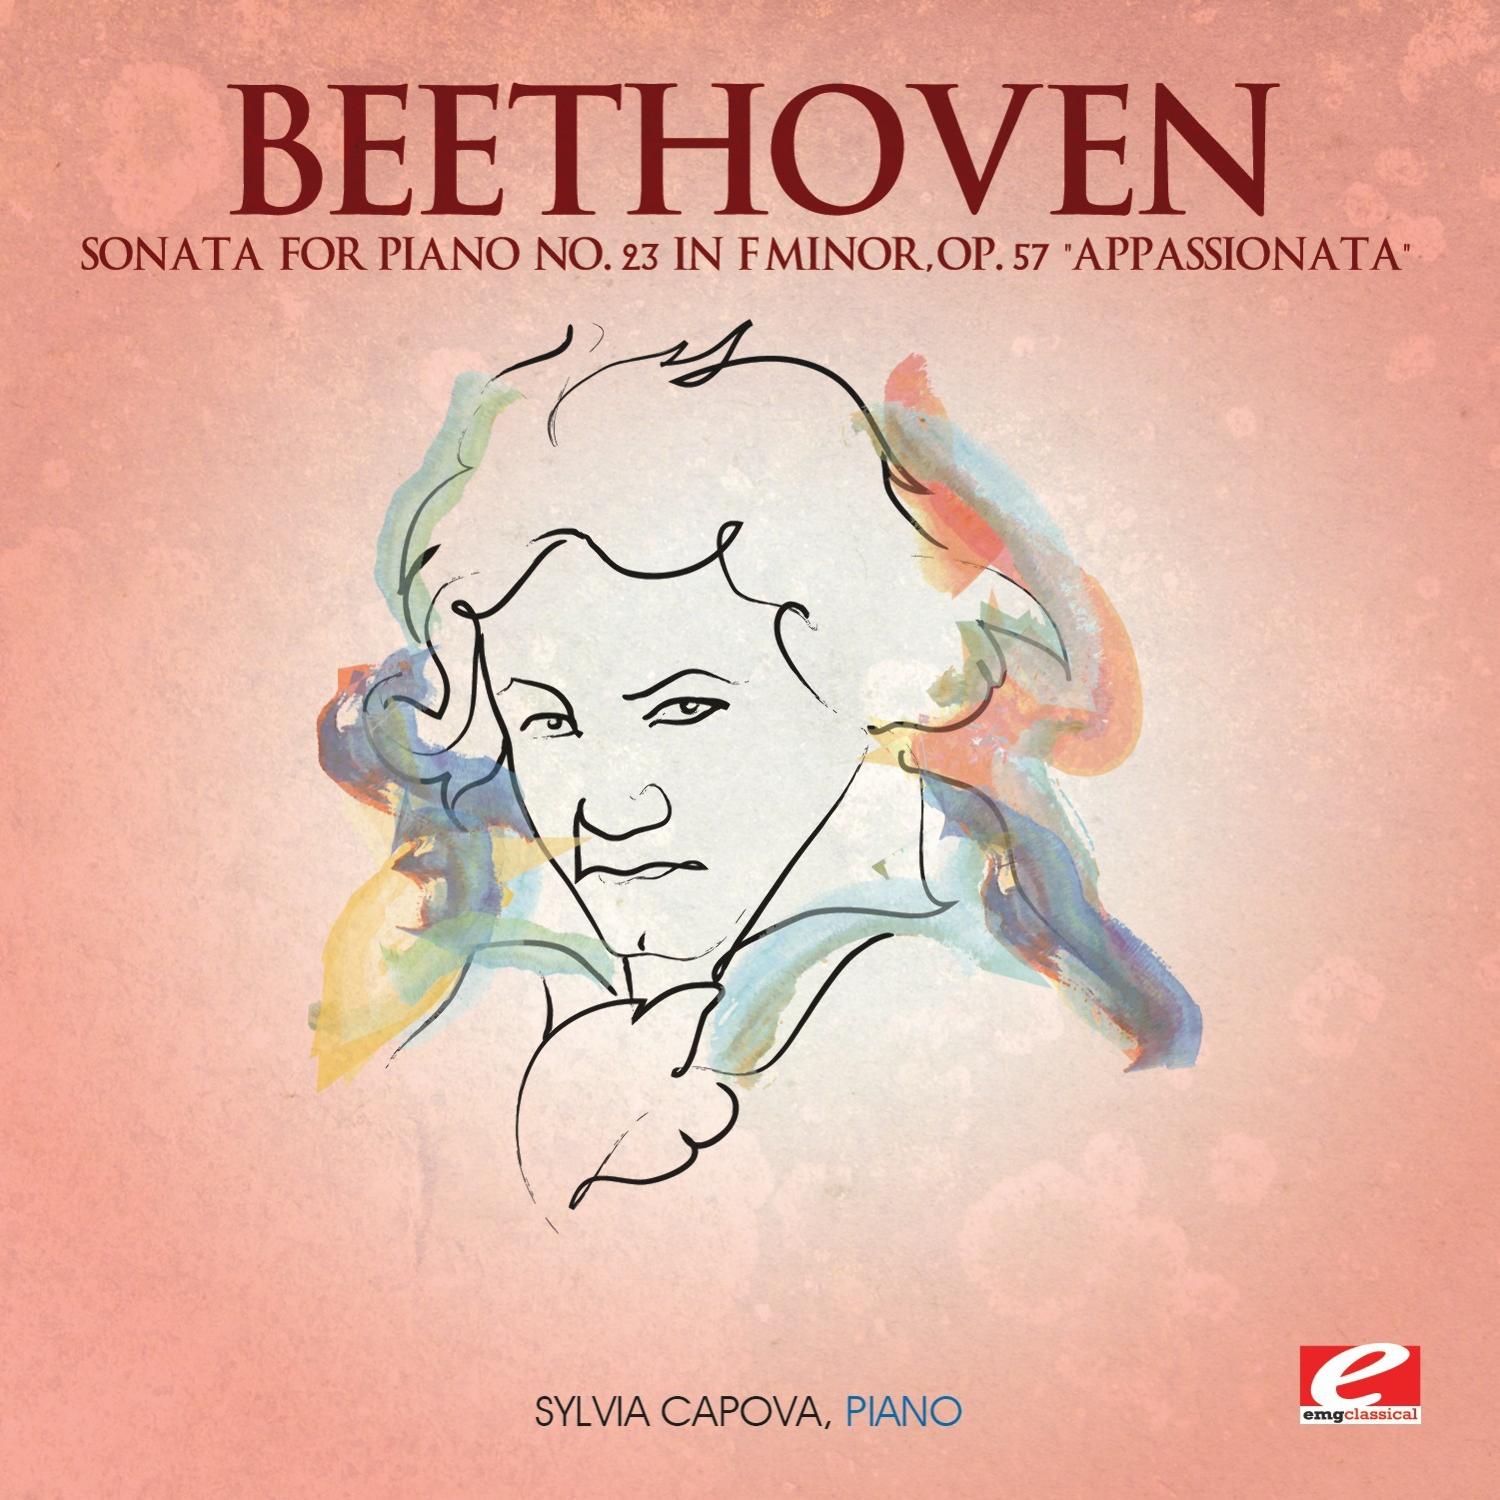 Beethoven: Sonata for Piano No. 23 in F Minor, Op. 57 "Appassionata" (Digitally Remastered)